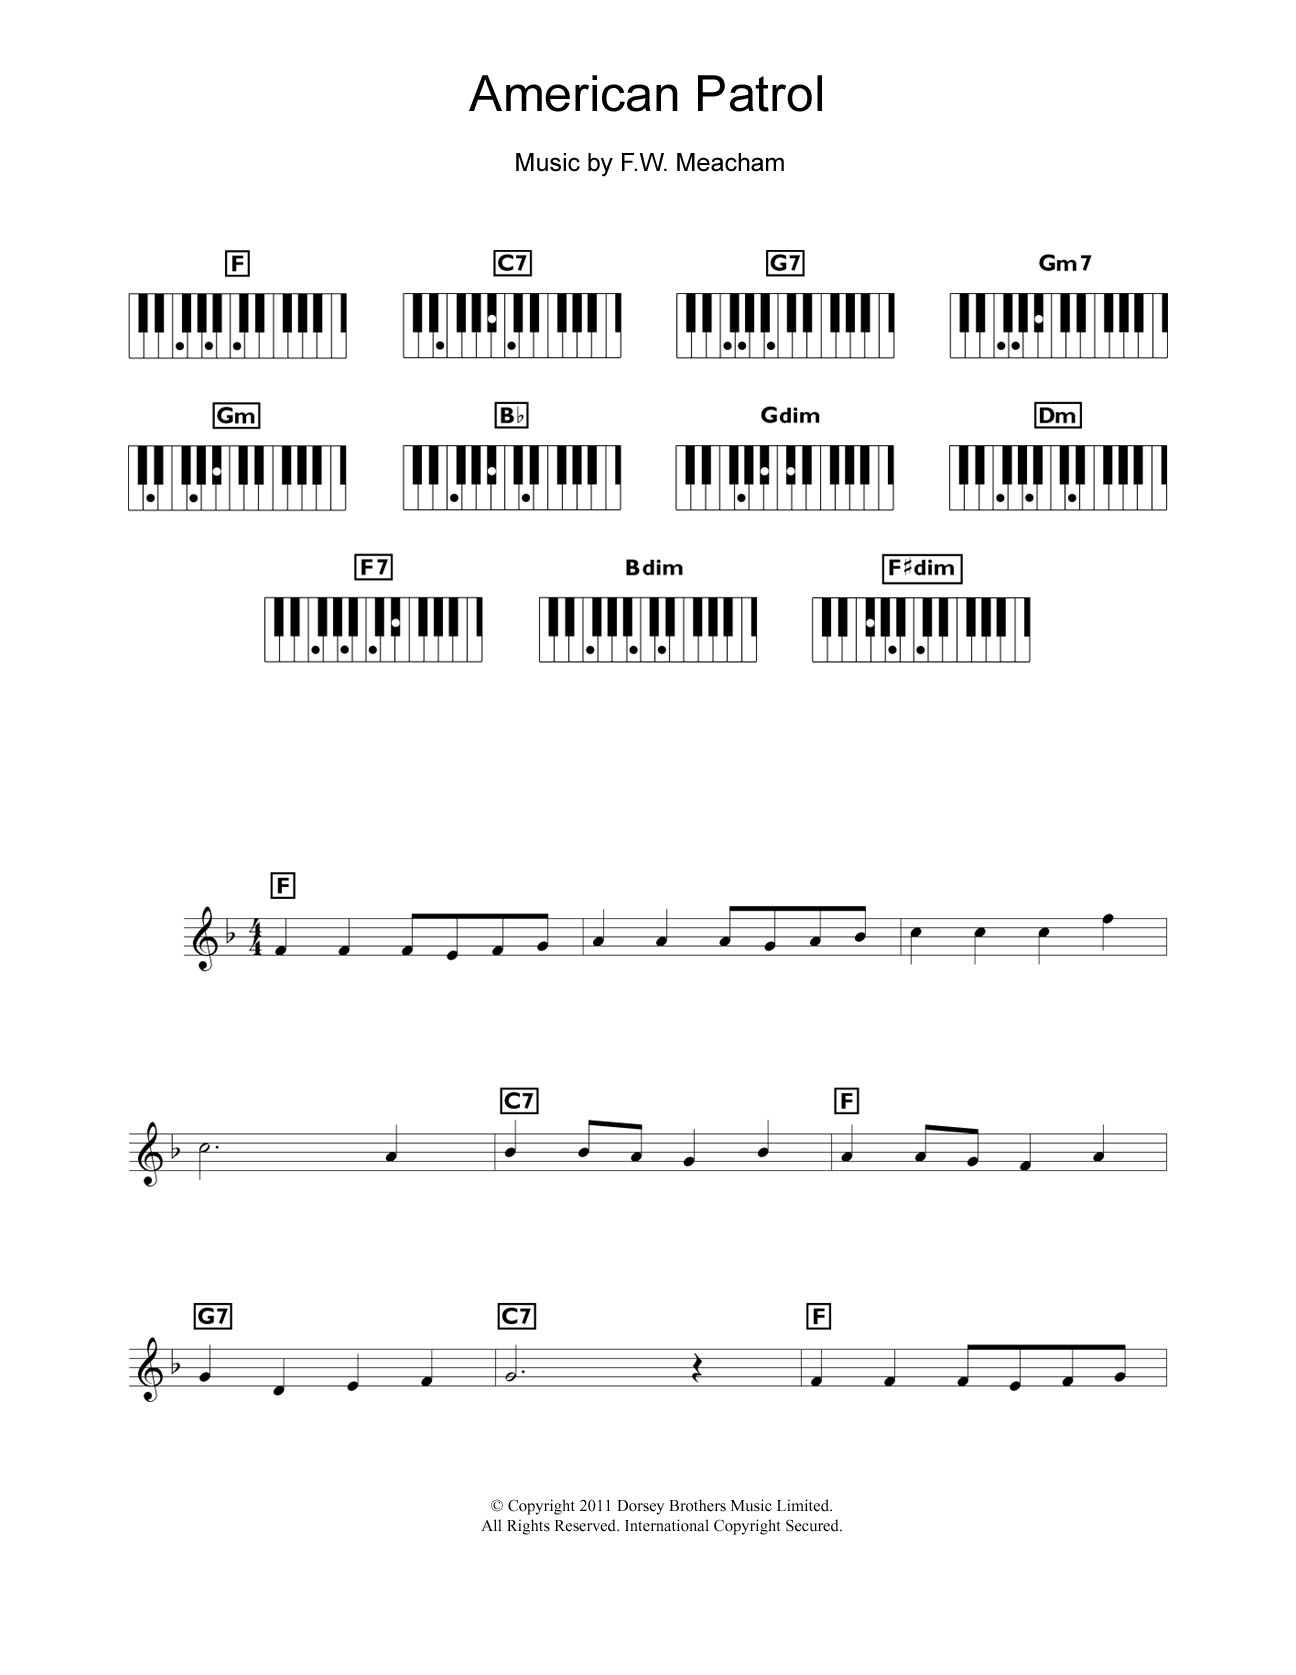 Glenn Miller American Patrol Sheet Music Notes & Chords for Piano Chords/Lyrics - Download or Print PDF